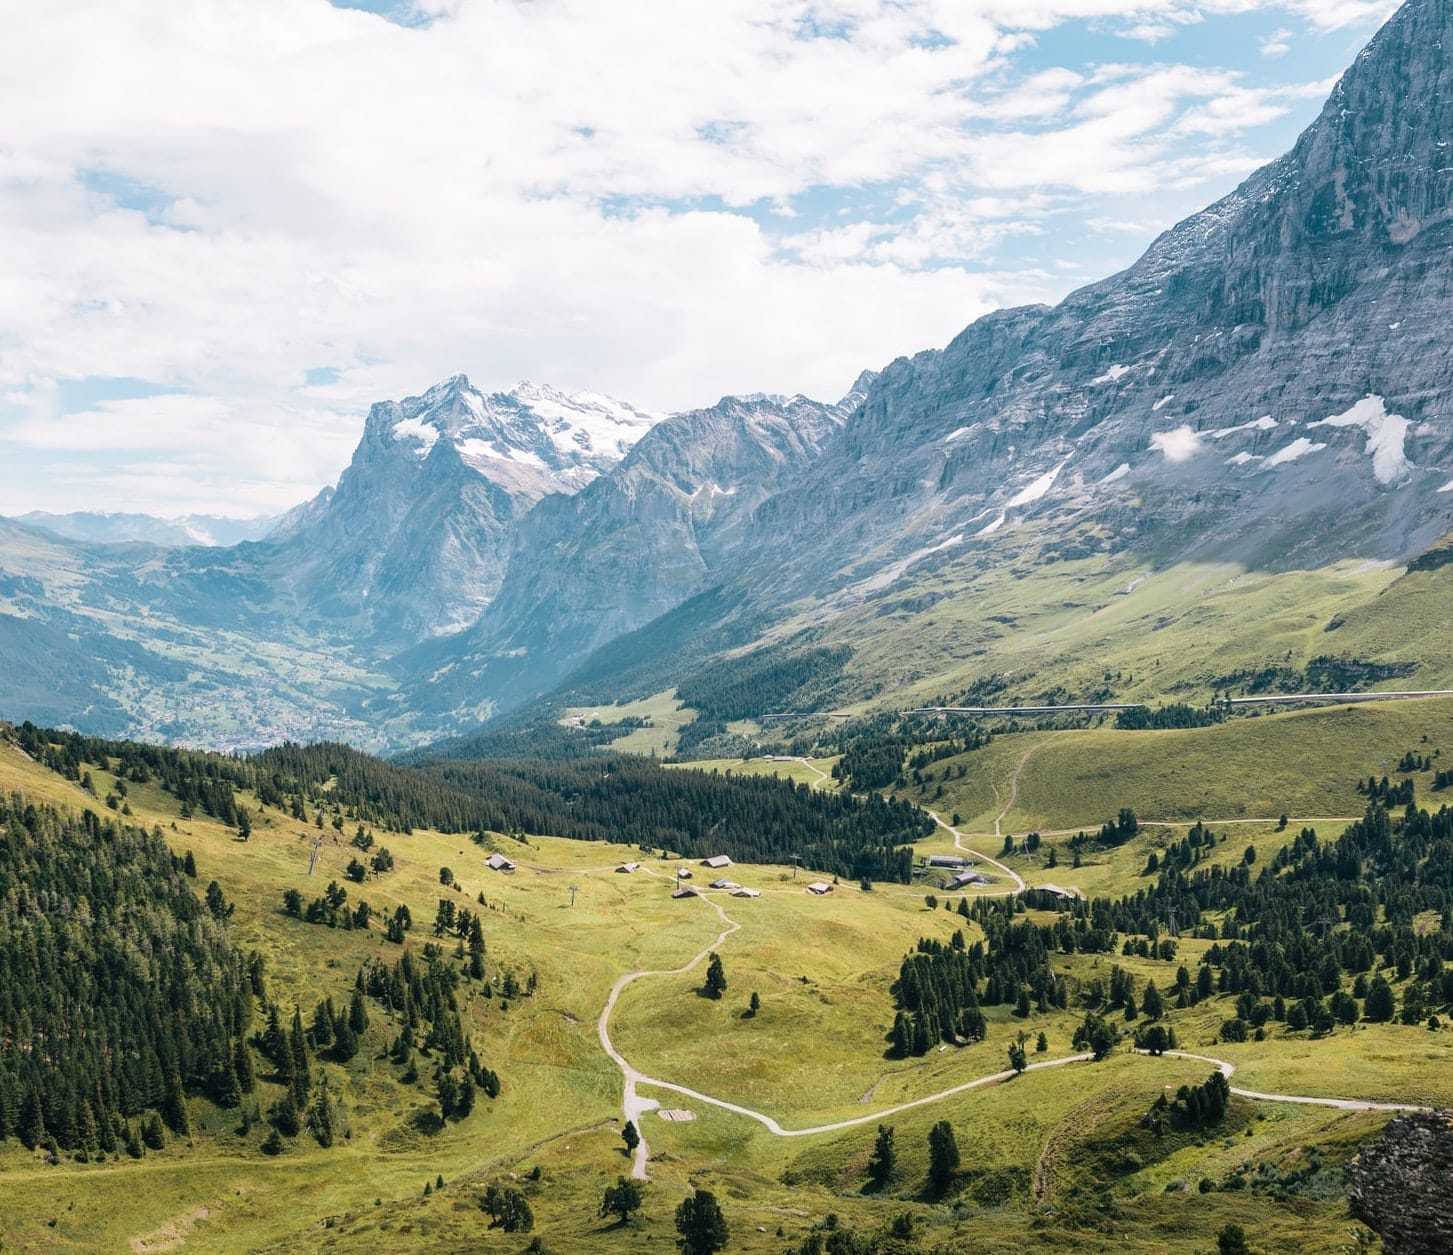 The European Alps in Switzerland